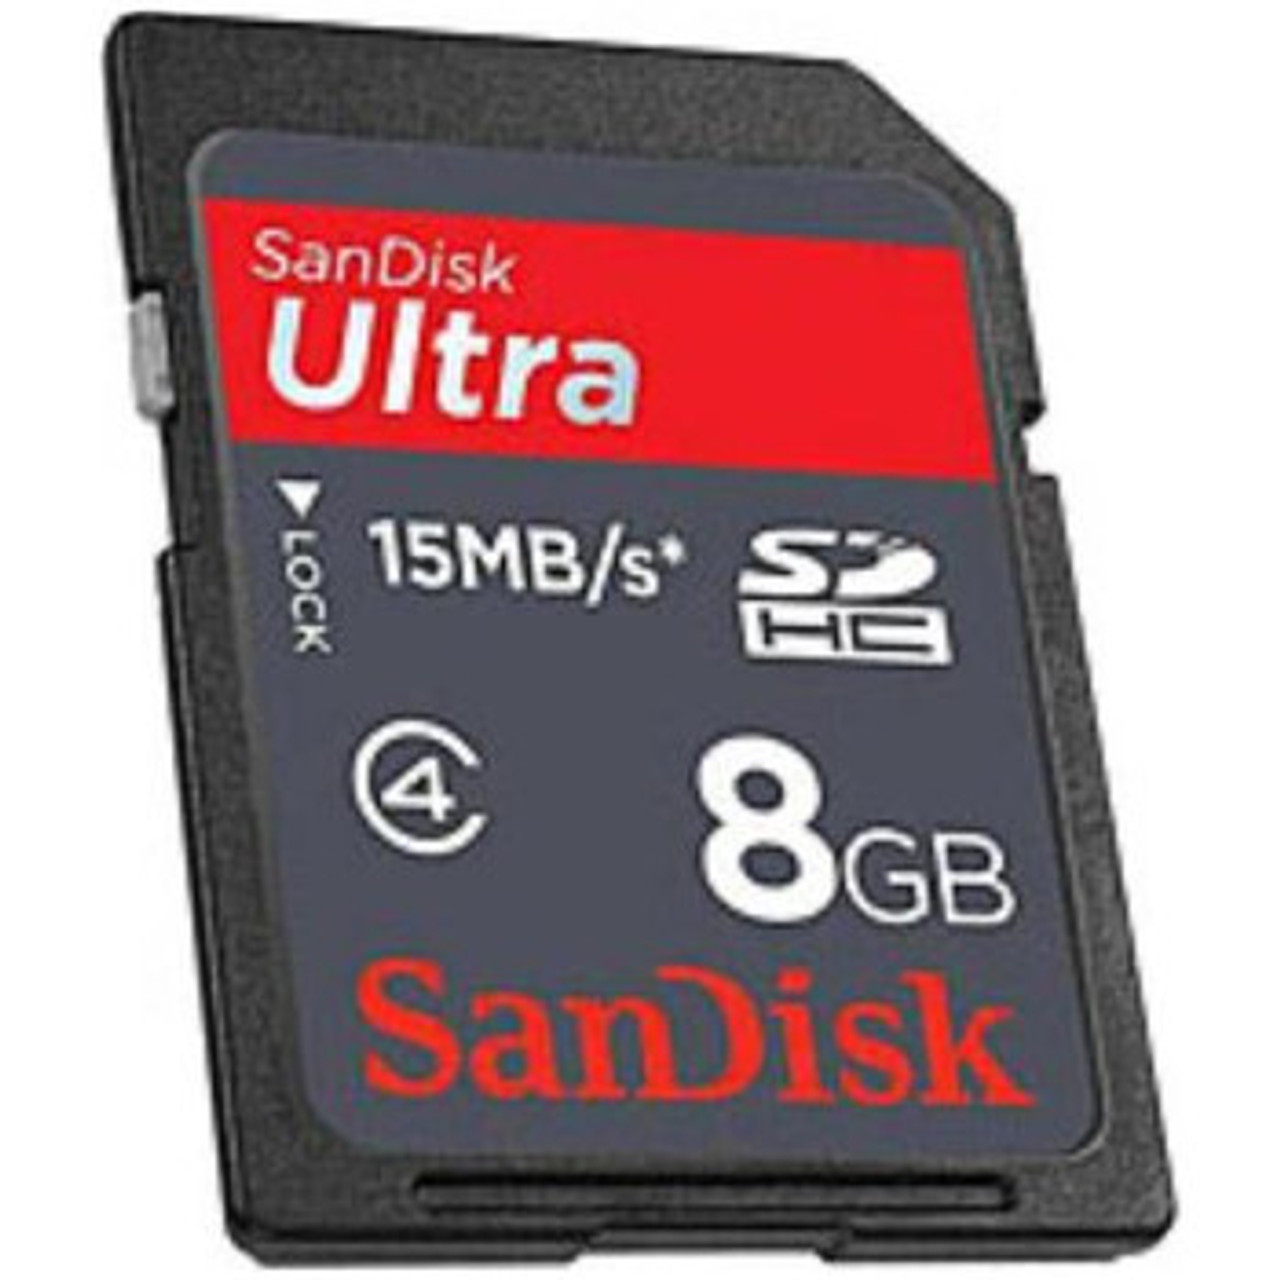 SDSDRH-008G-A11 | Sandisk | 8Gb Ultra 15Mb/S High Capacity Secure Digital (Sdhc) Memory Card